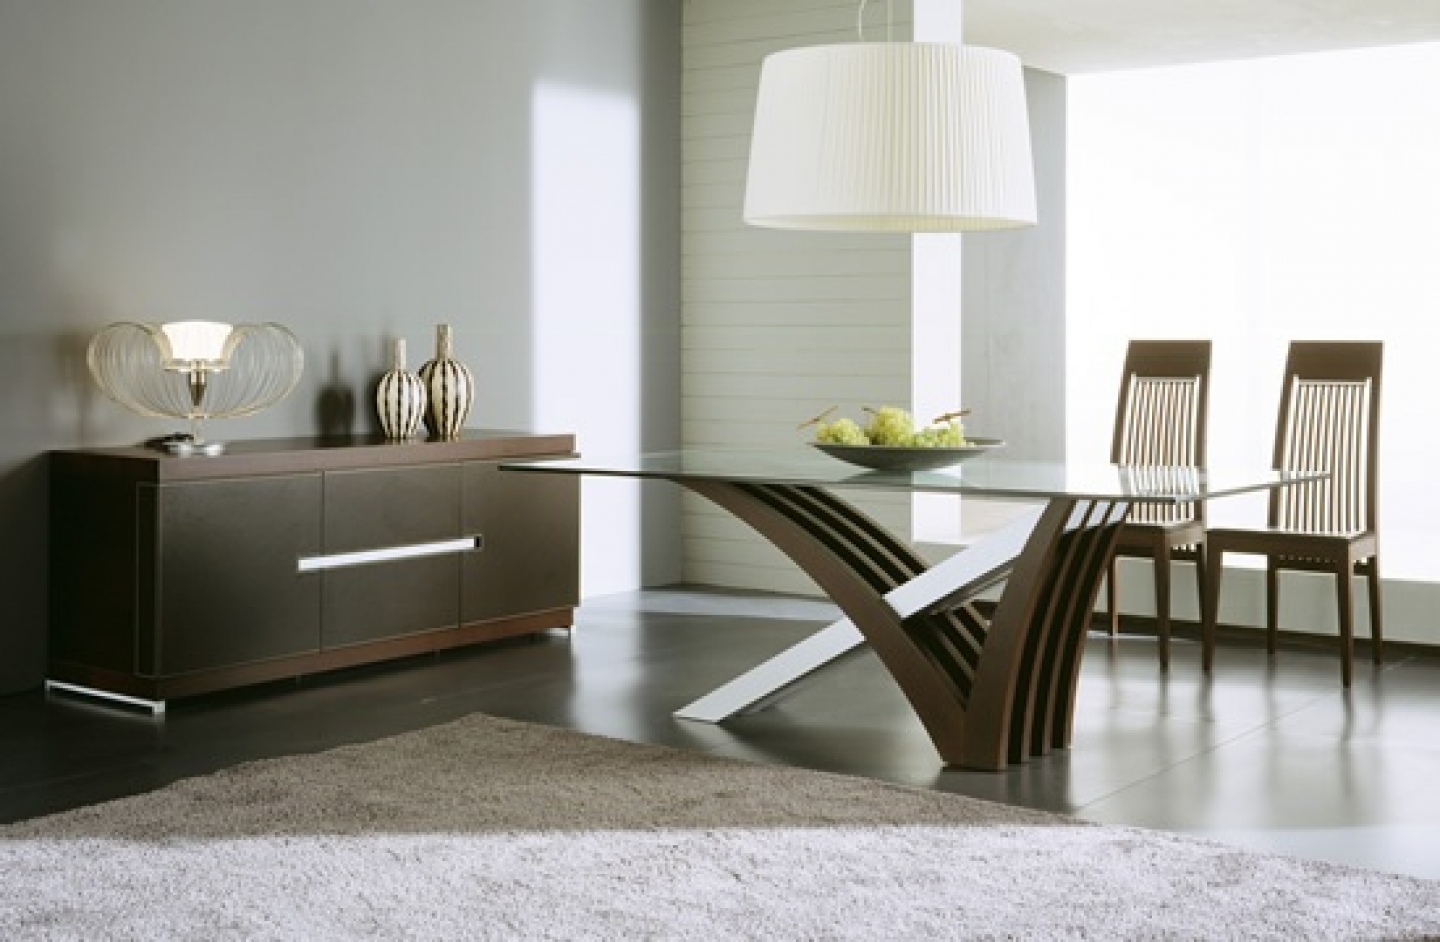 Simple Wooden Furniture And Fur Carpet For Modern Interior Interior Design